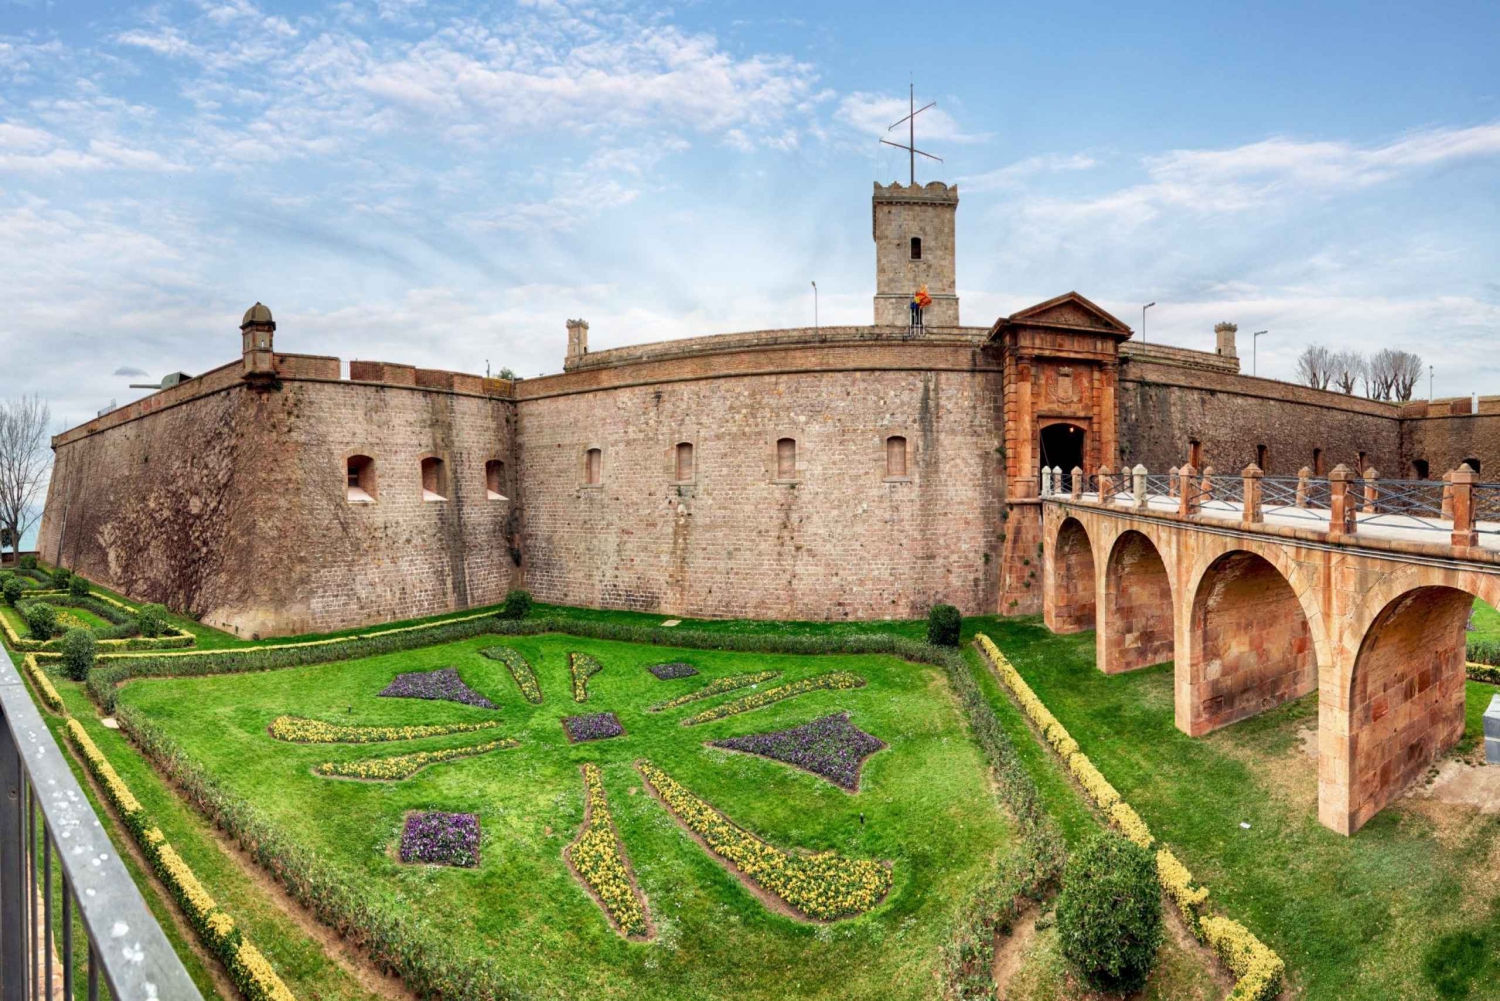 Visita sin colas al Castillo de Montjuïc con Teleférico